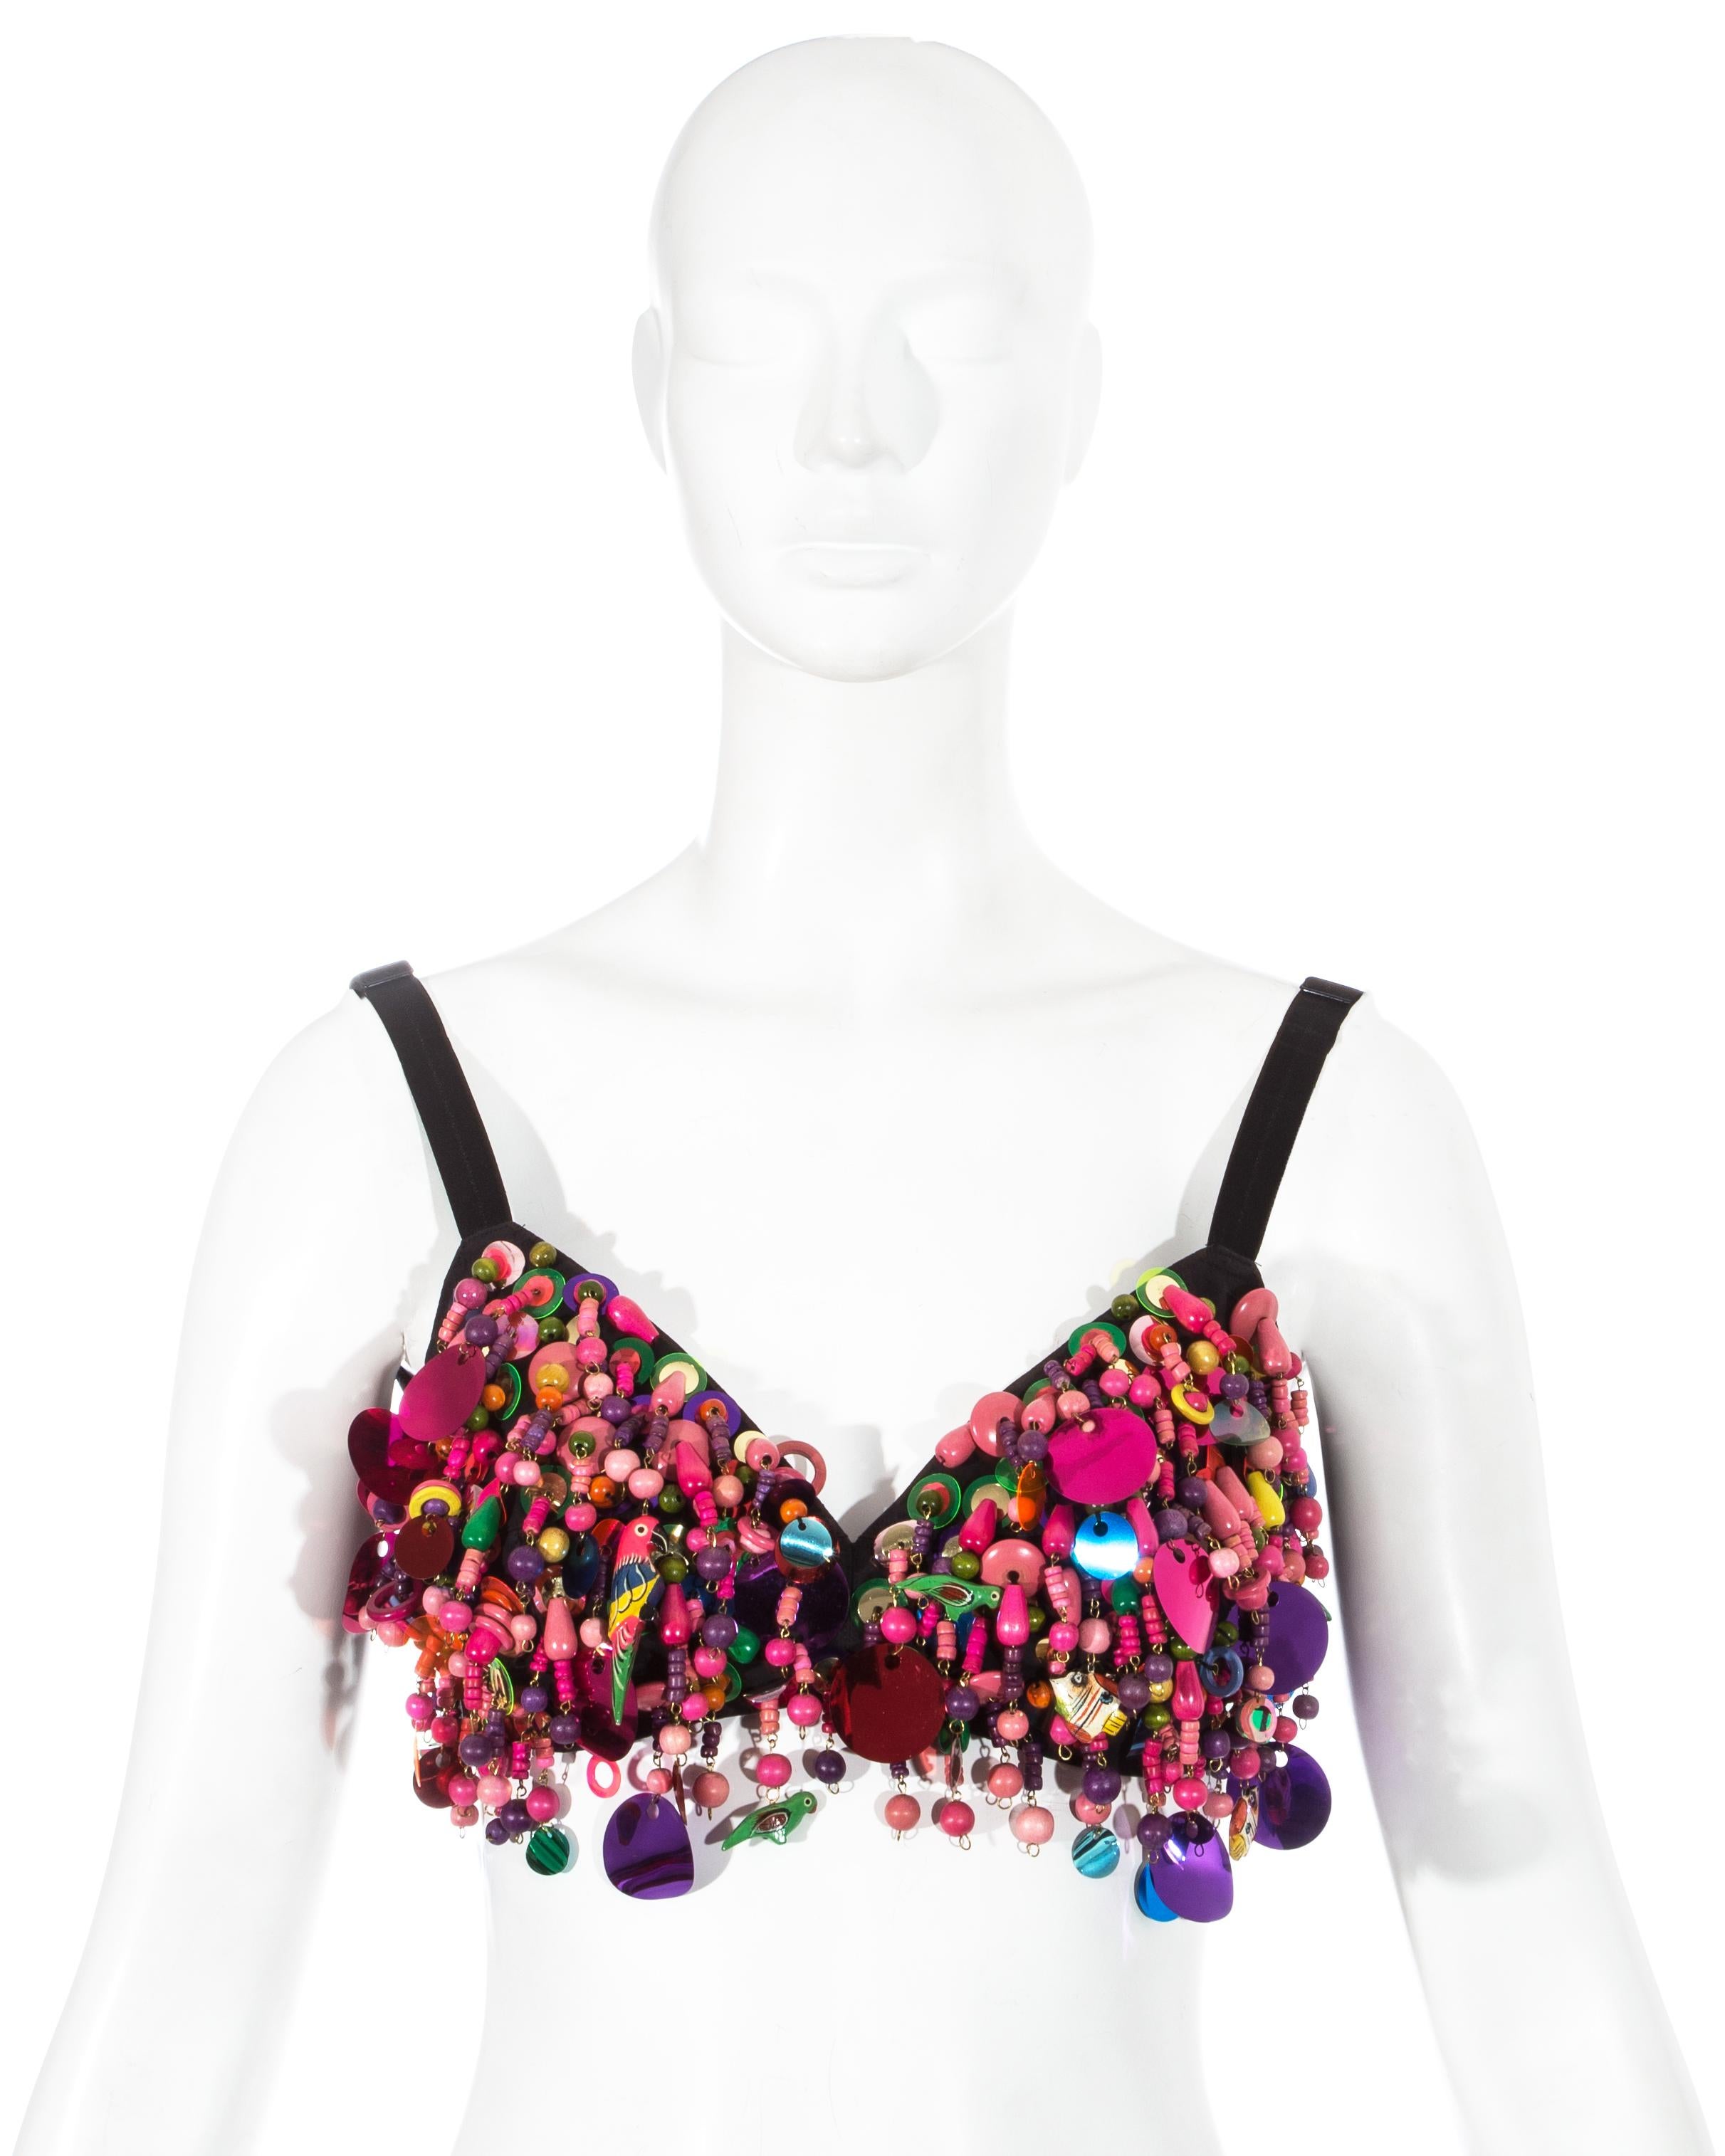 Dolce & Gabbana beaded and sequin bra

Spring-Summer 1992